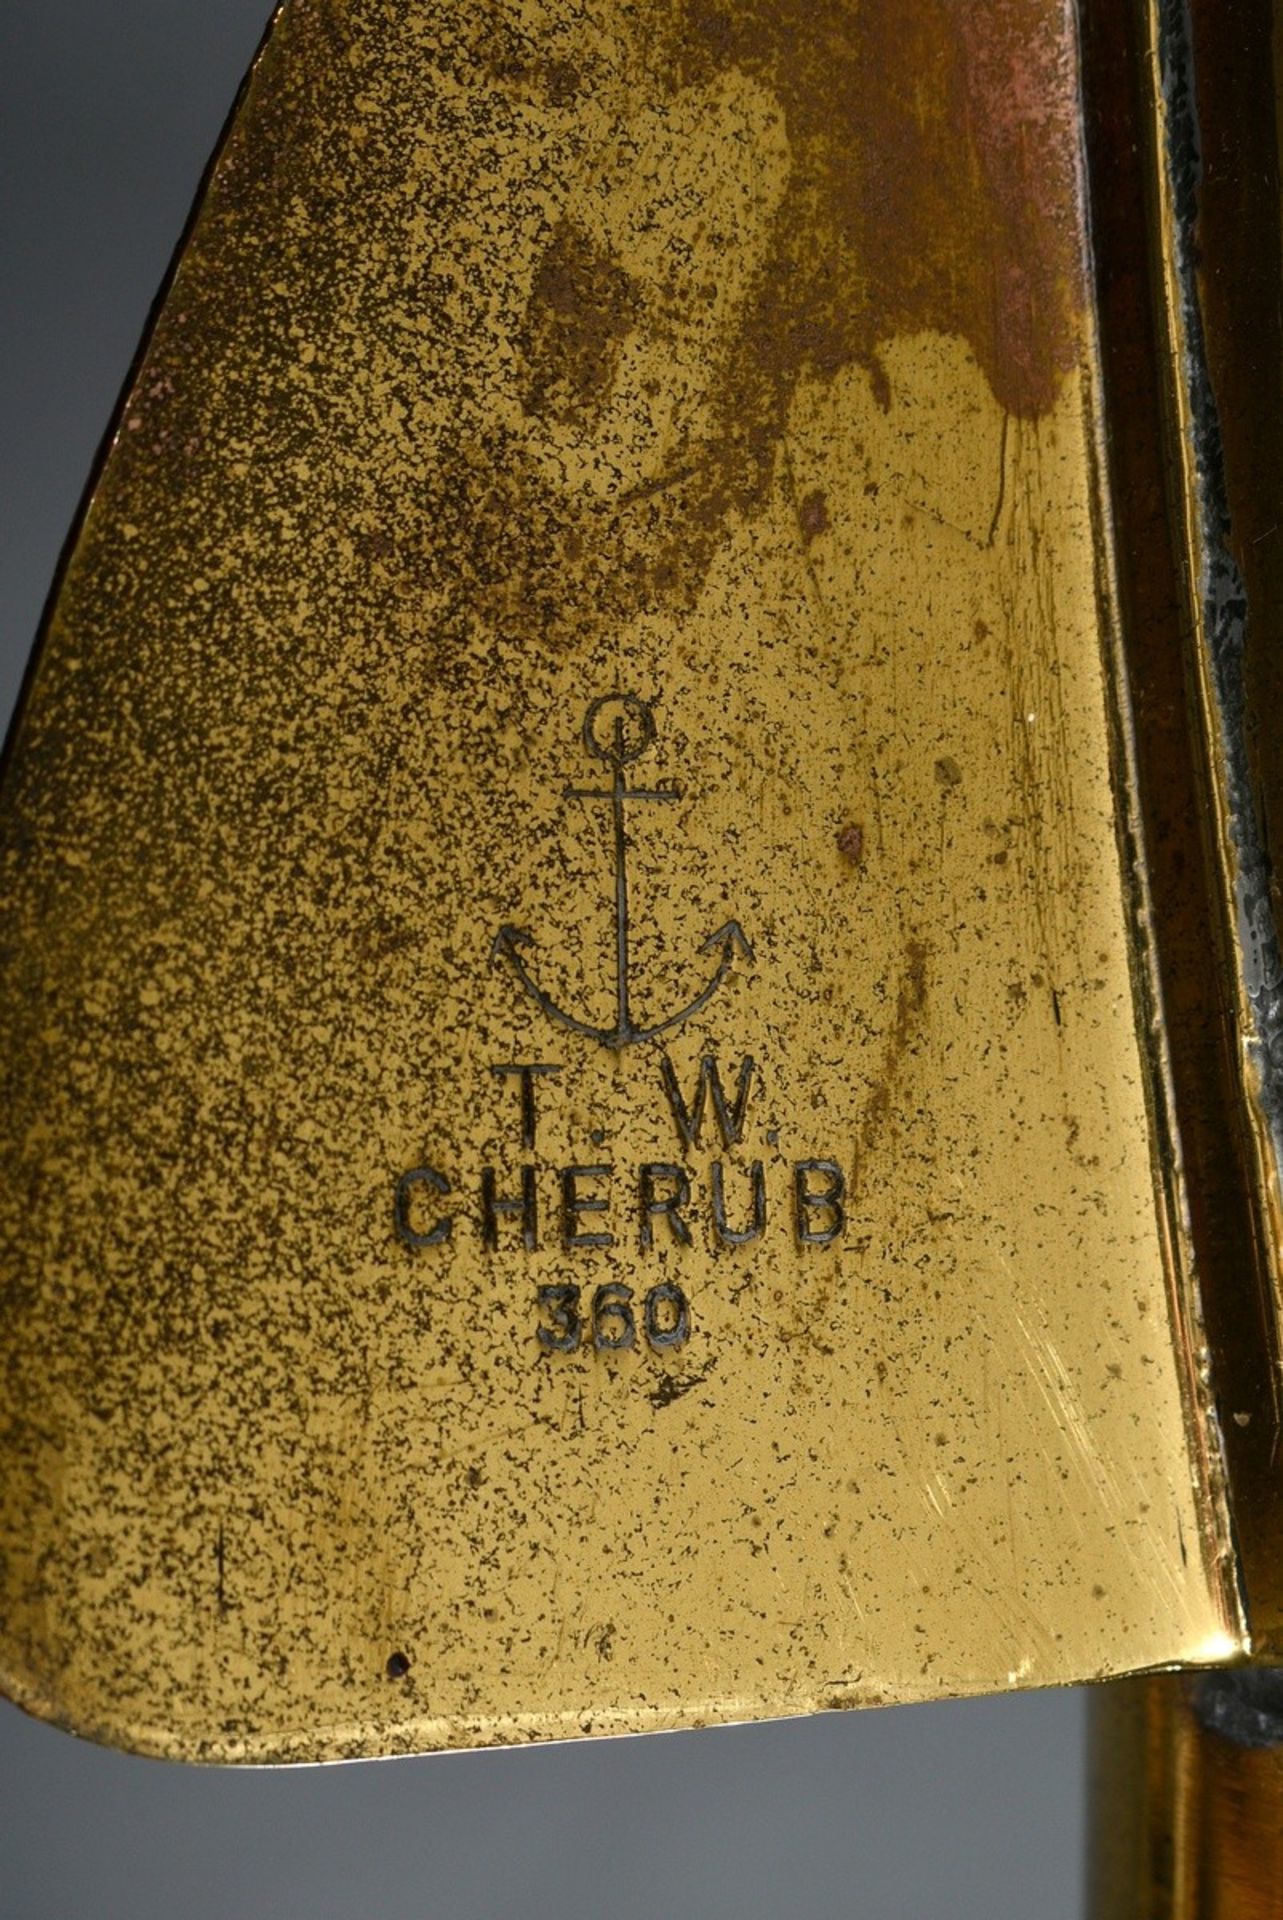 Ship's log "T.W. Cherub Mark III" by Thos. Walker & Son, Ltd. Birmingham, three parts, mid 20th c., - Image 7 of 7